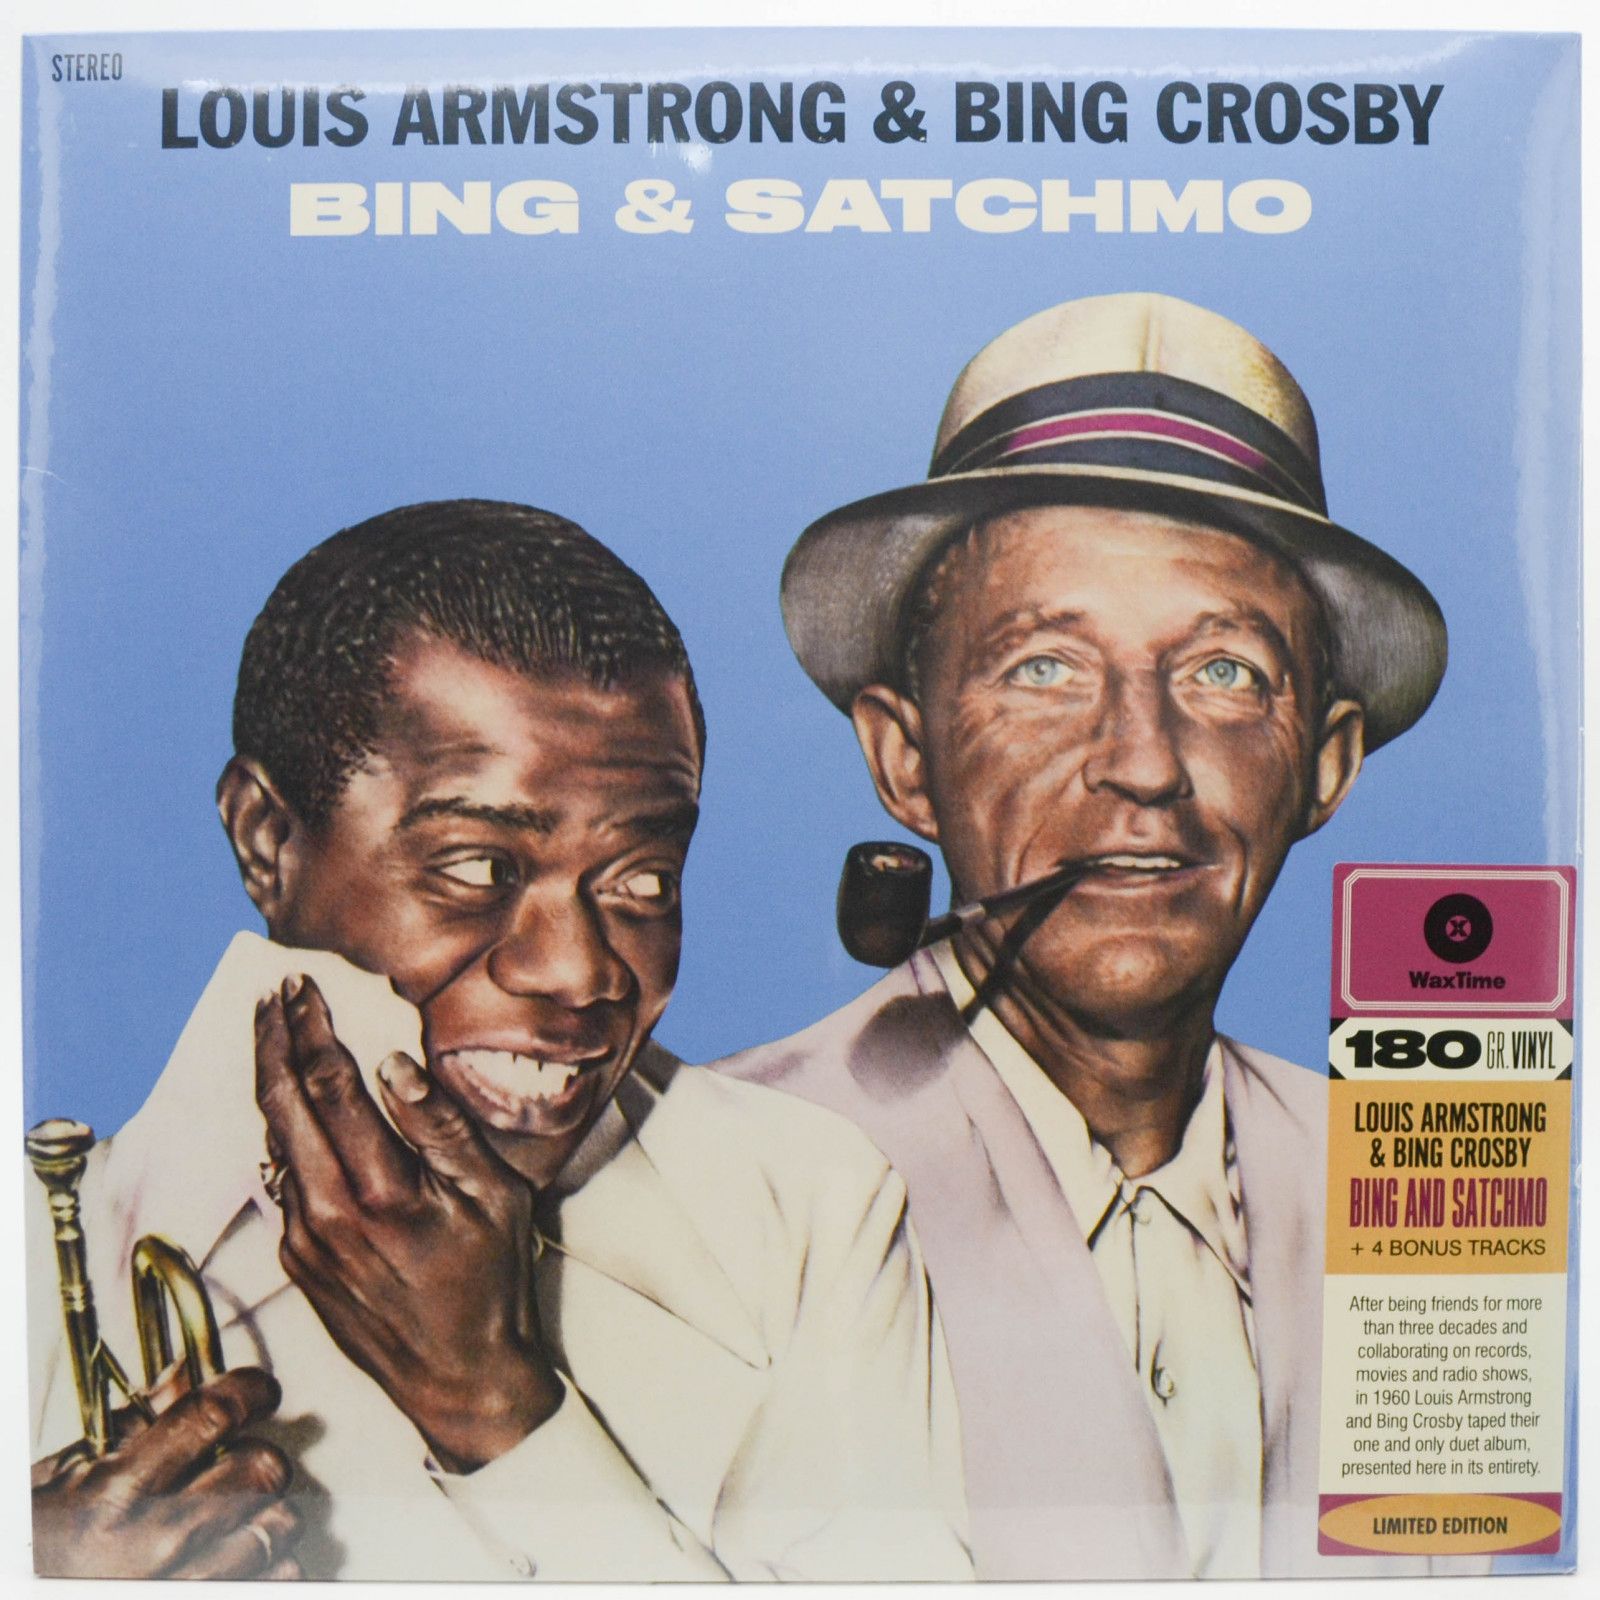 Louis Armstrong & Bing Crosby — Bing & Satchmo, 1960